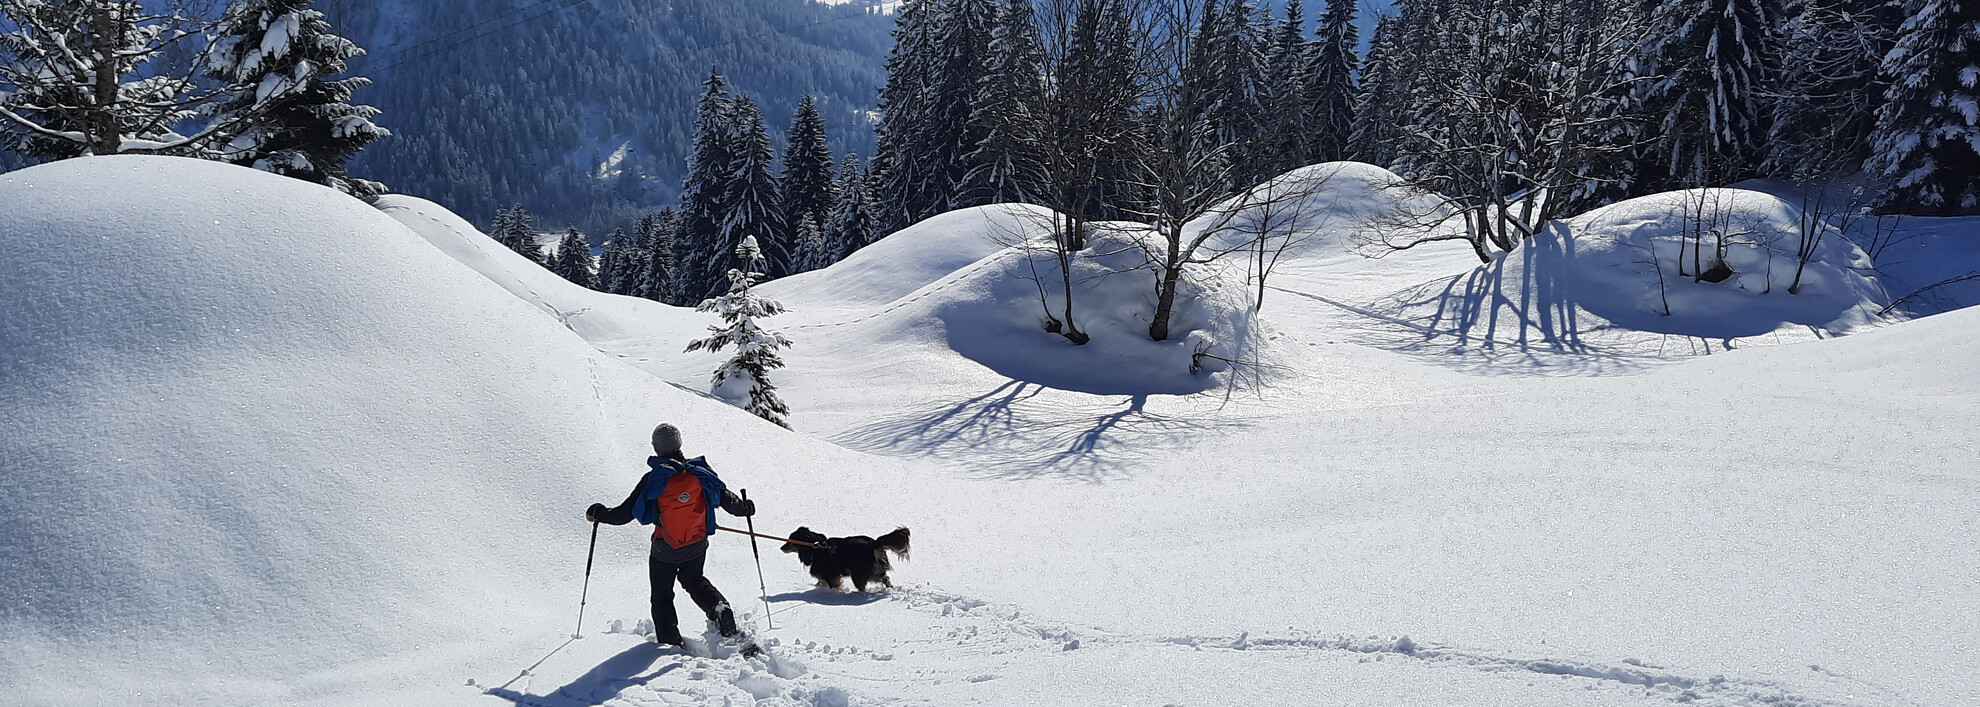 Snowshoe tour with dogs | © S&H Hundewelt Wandertouren GmbH